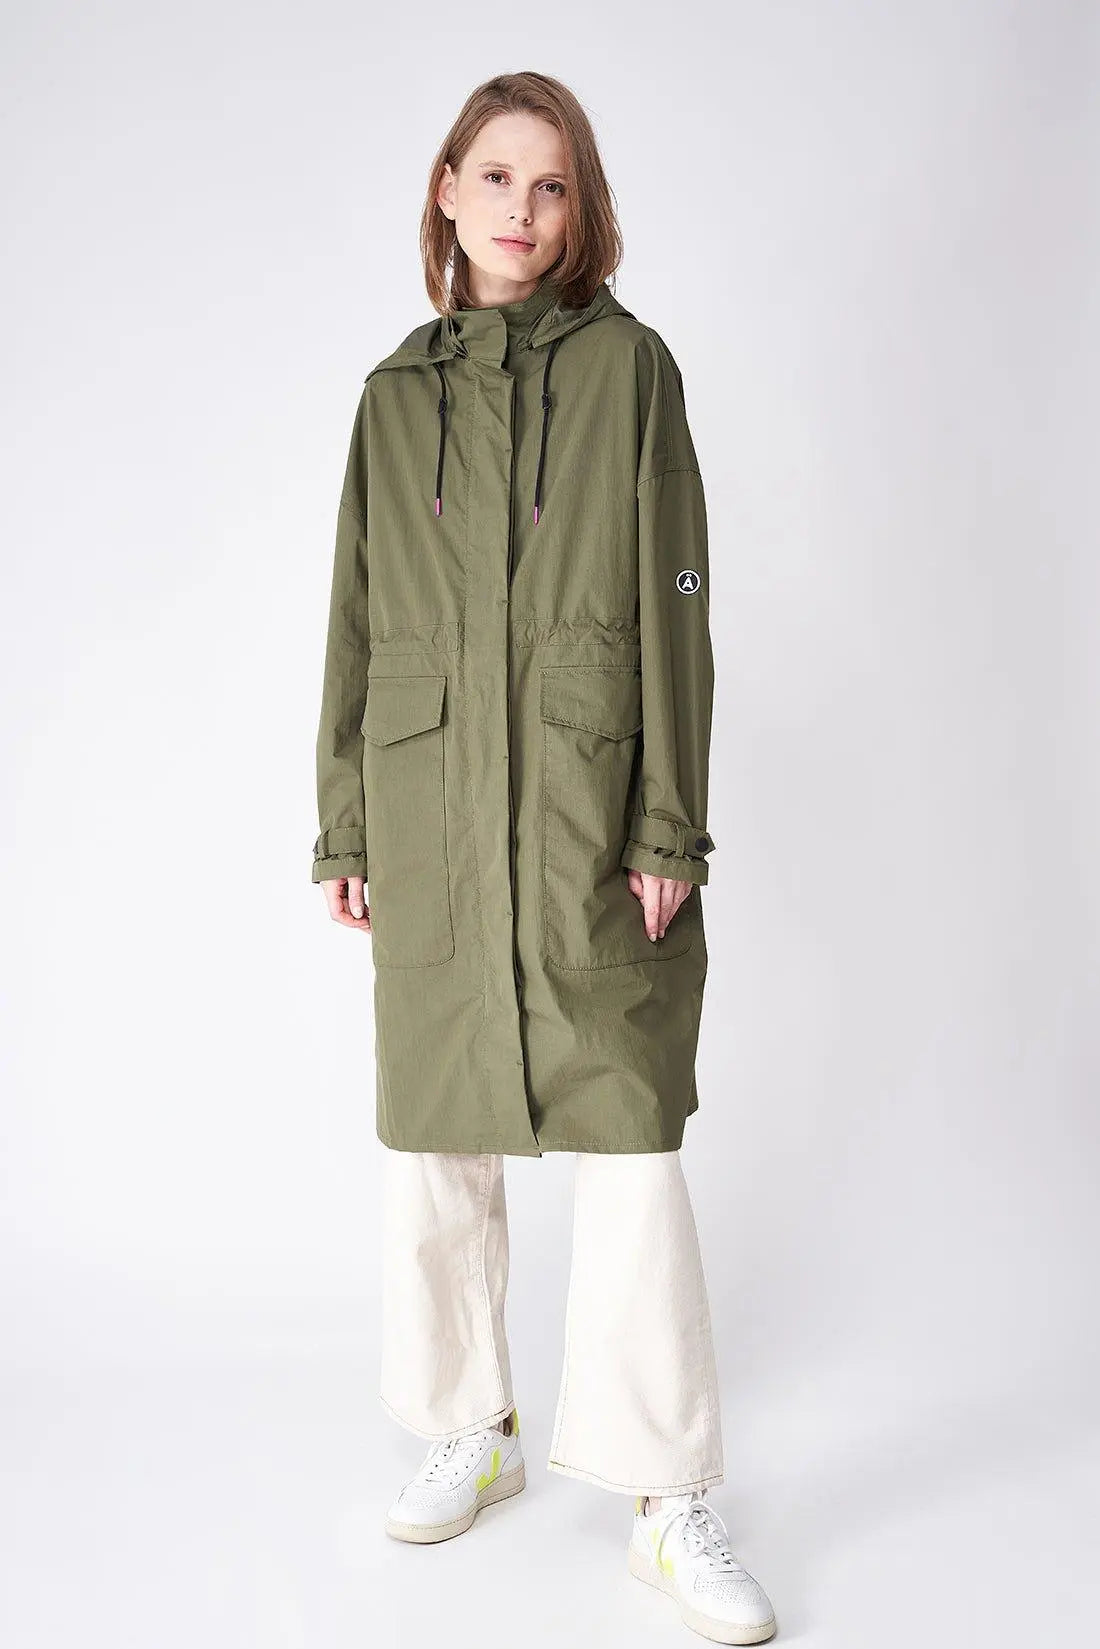 Hymmel - Chubasquero o chaqueta Ligero de Mujer – Rainwear